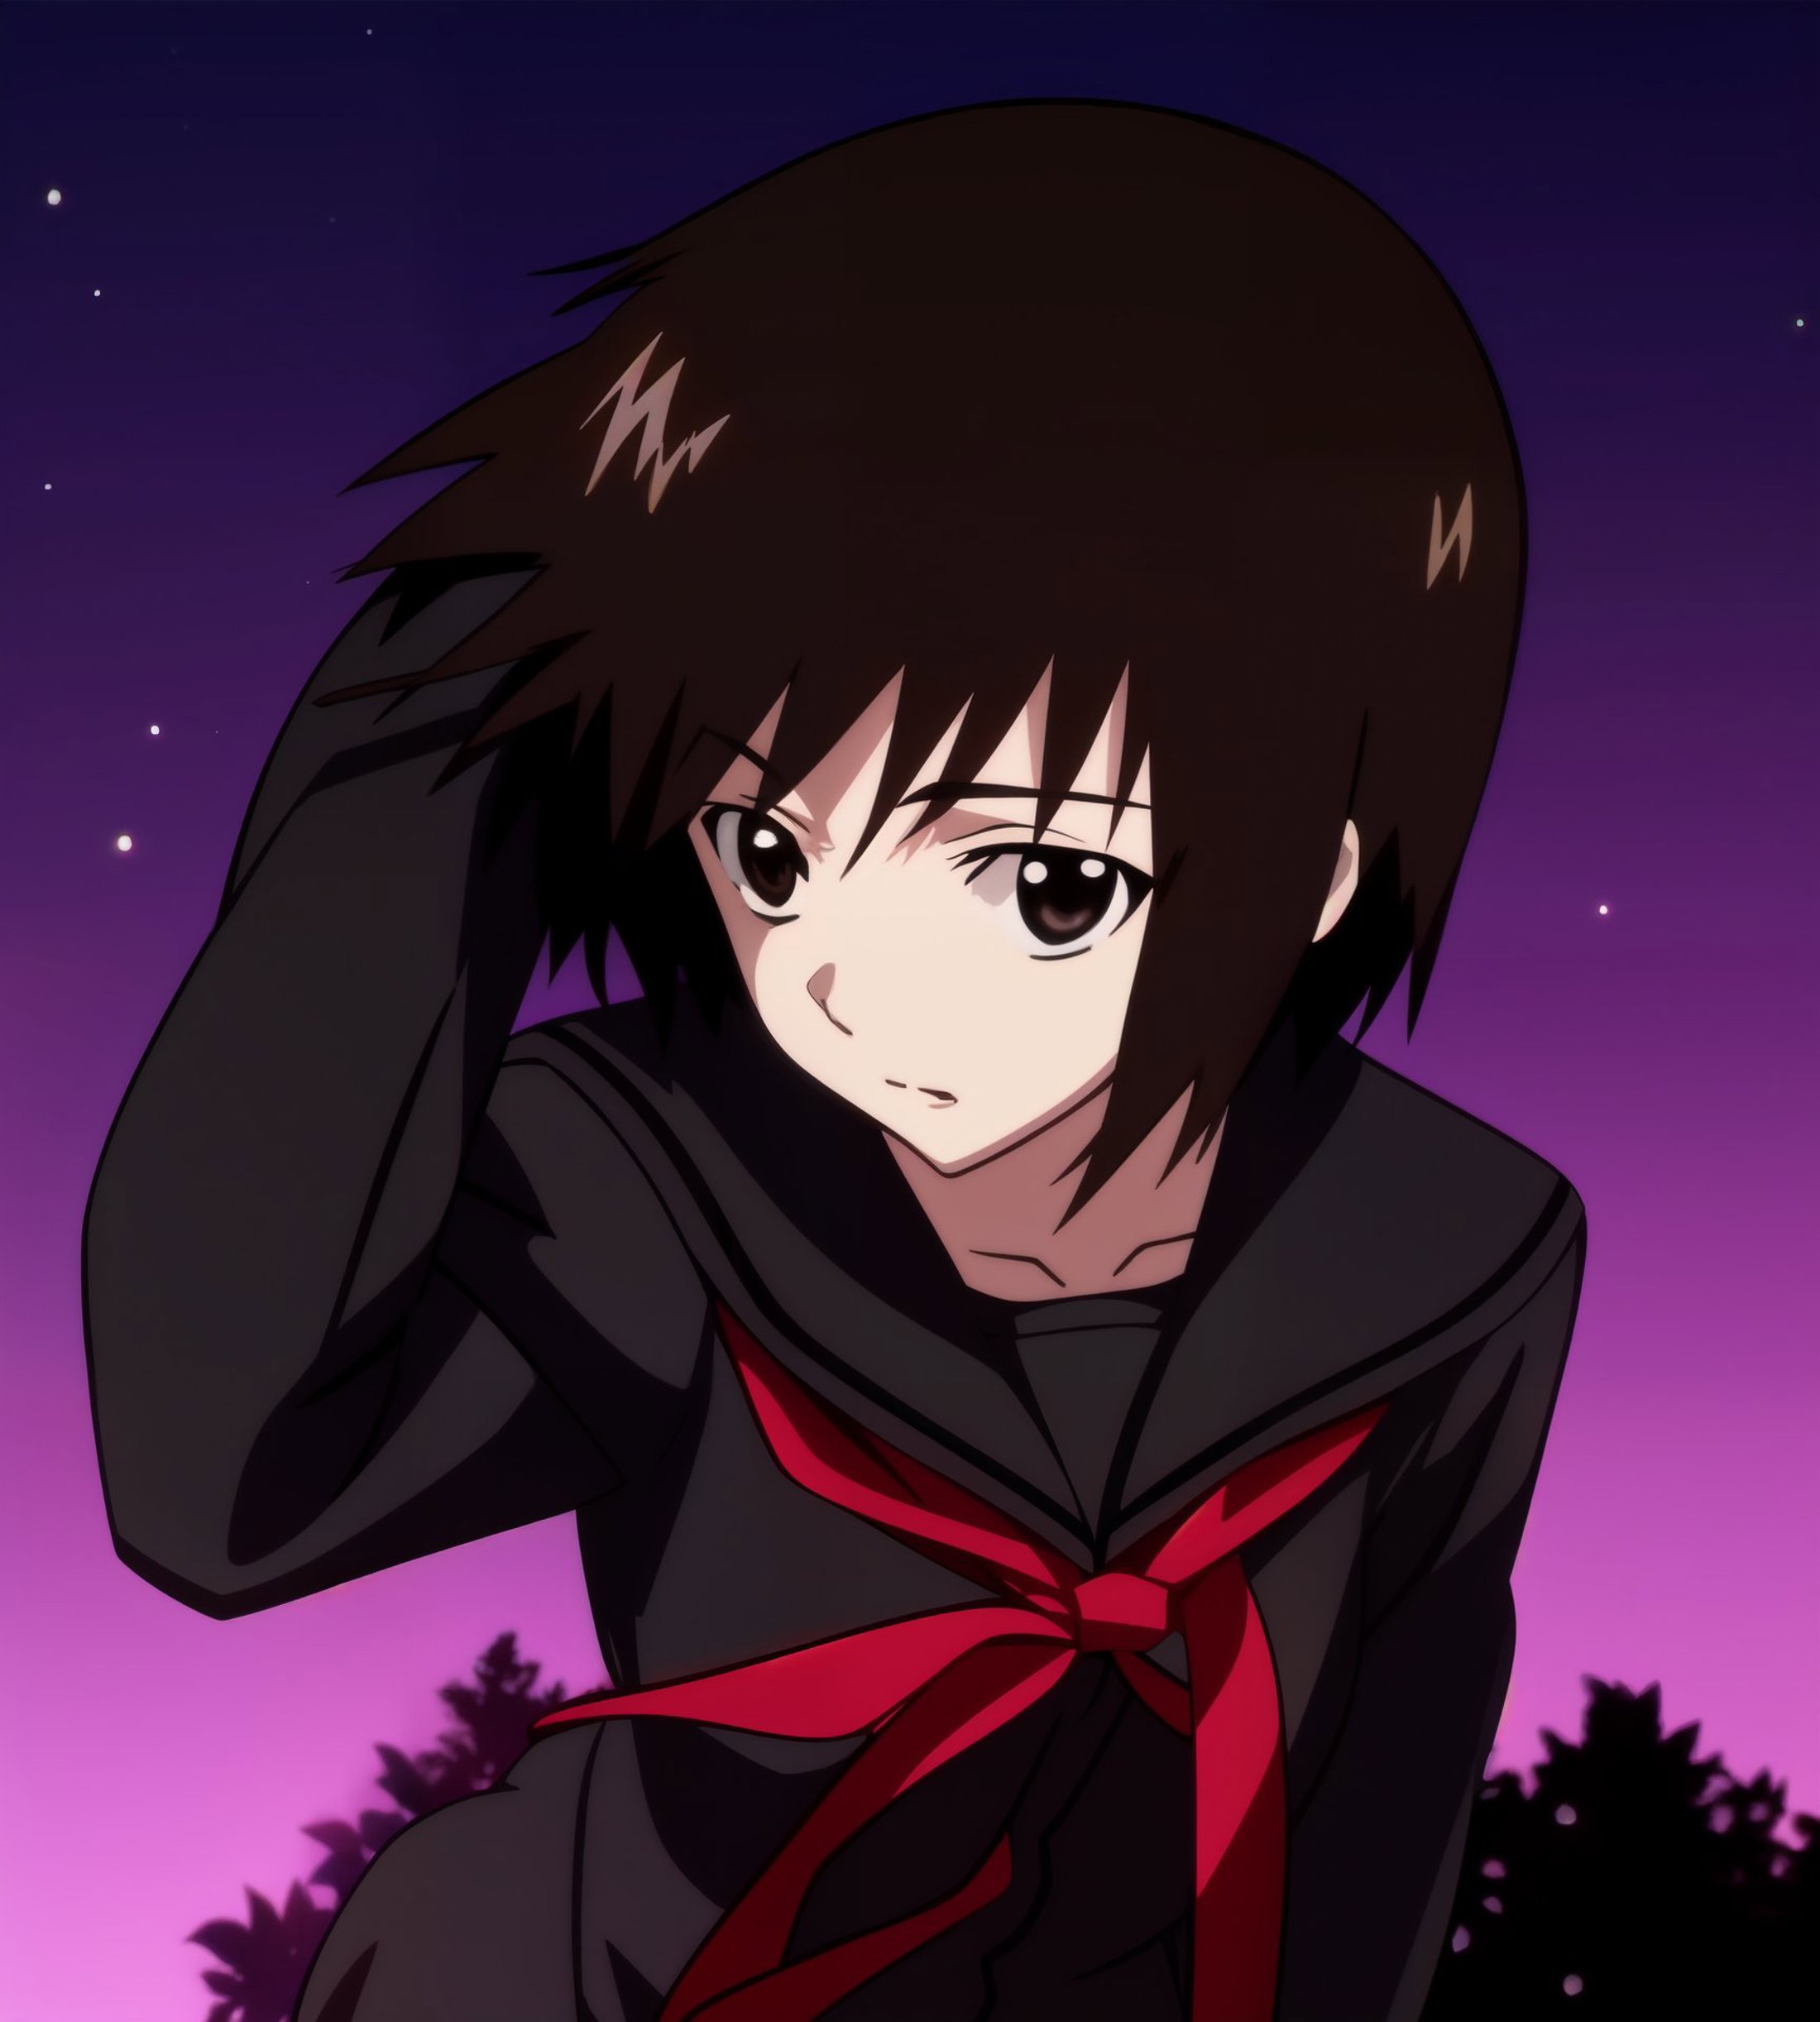 Nakahara Misaki / Welcome to the NHK / original anime style image by bloknoto